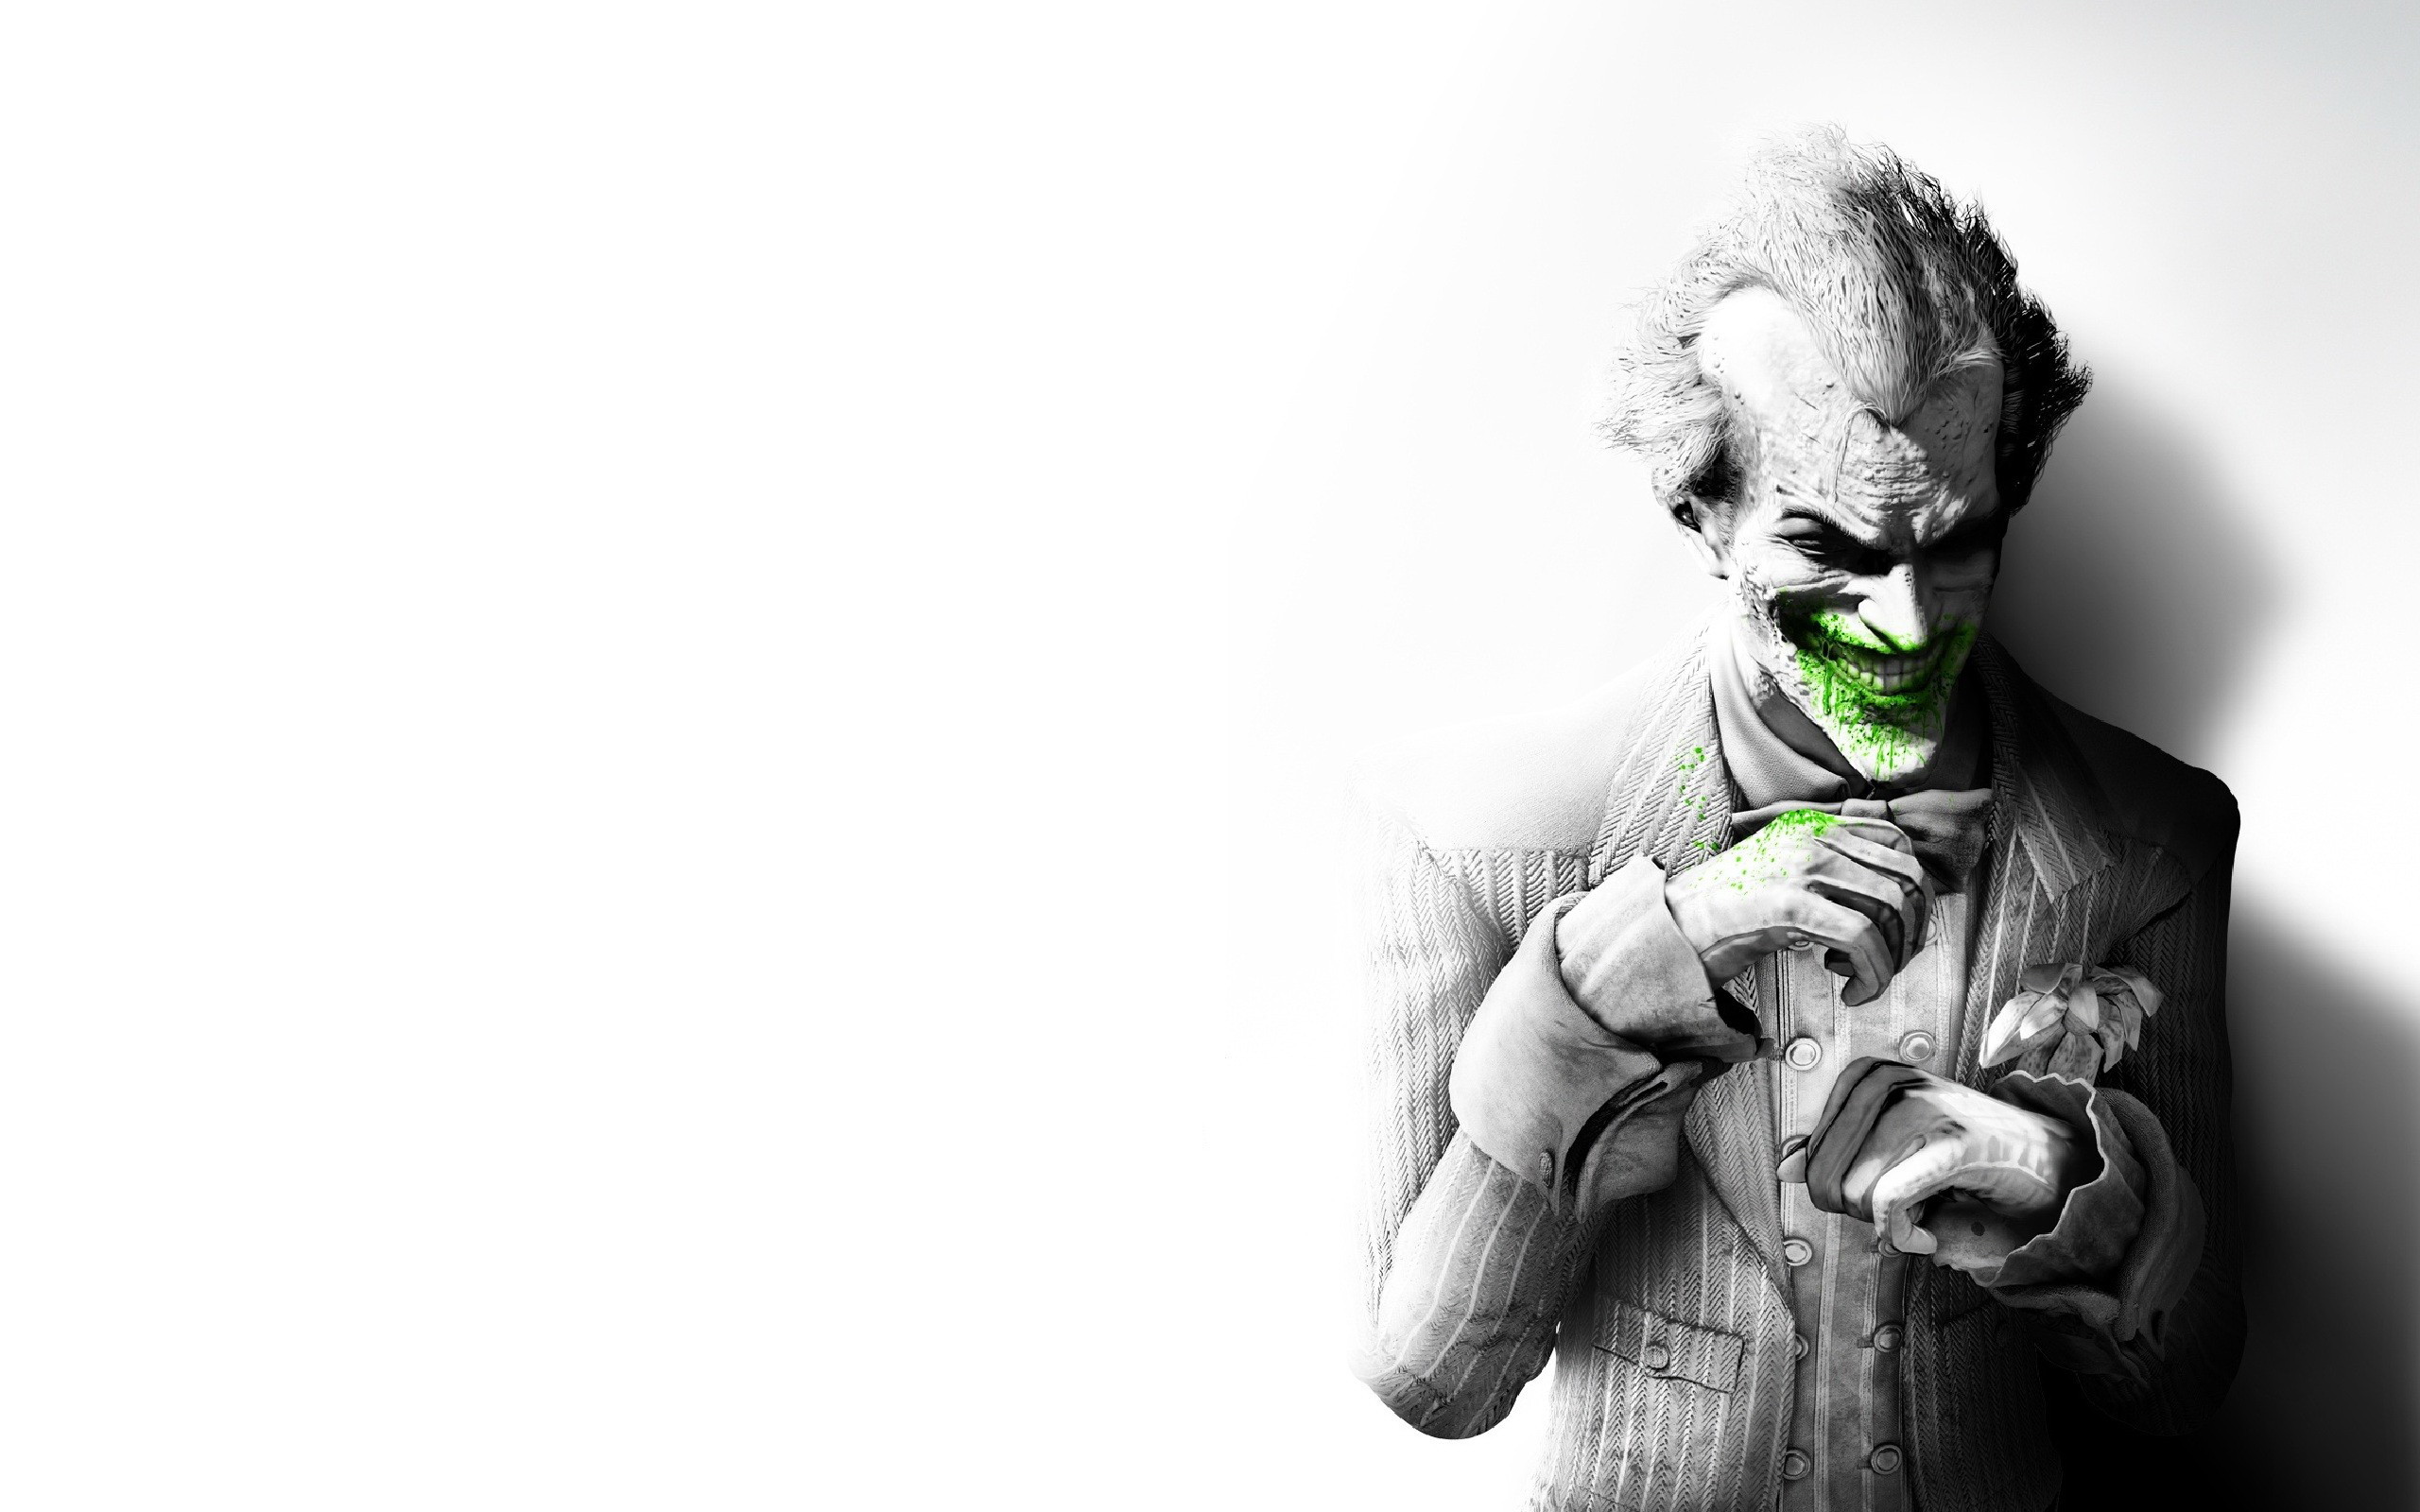 Gratis Kumpulan Wallpaper Hd In Joker Hd Terbaik Background Id